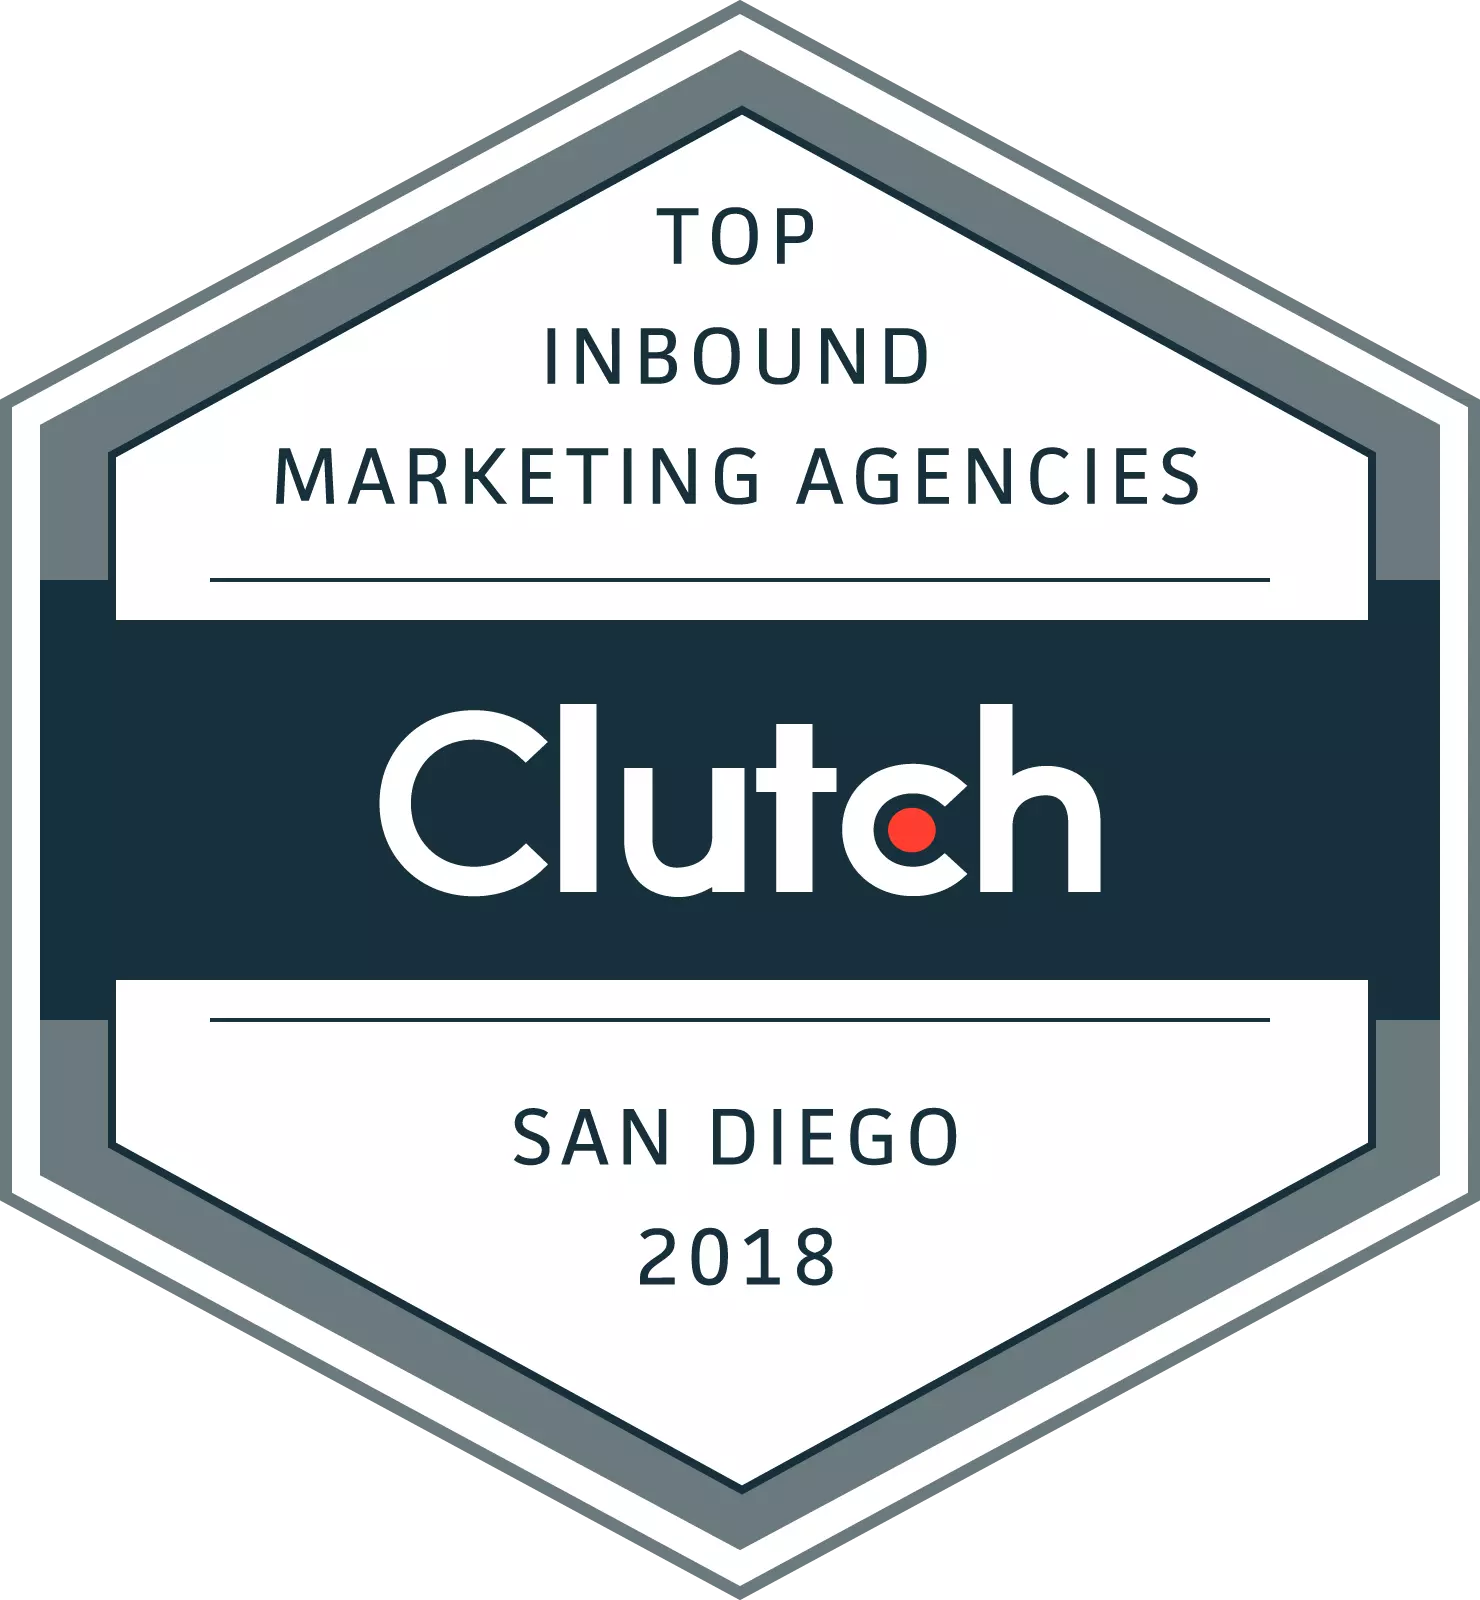 Named Top 10 San Diego Inbound Marketing Agencies
Named one of the Top 10 Inbound Marketing Agencies in San Diego by Clutch.co
etc